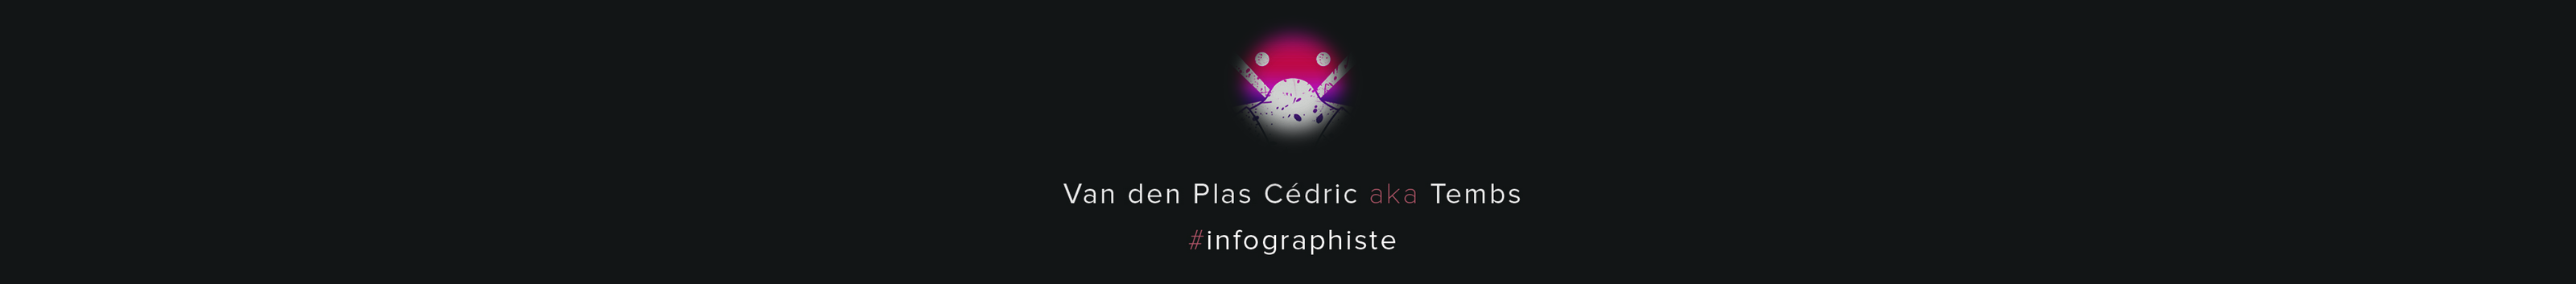 Banner de perfil de Cédric Van den Plas